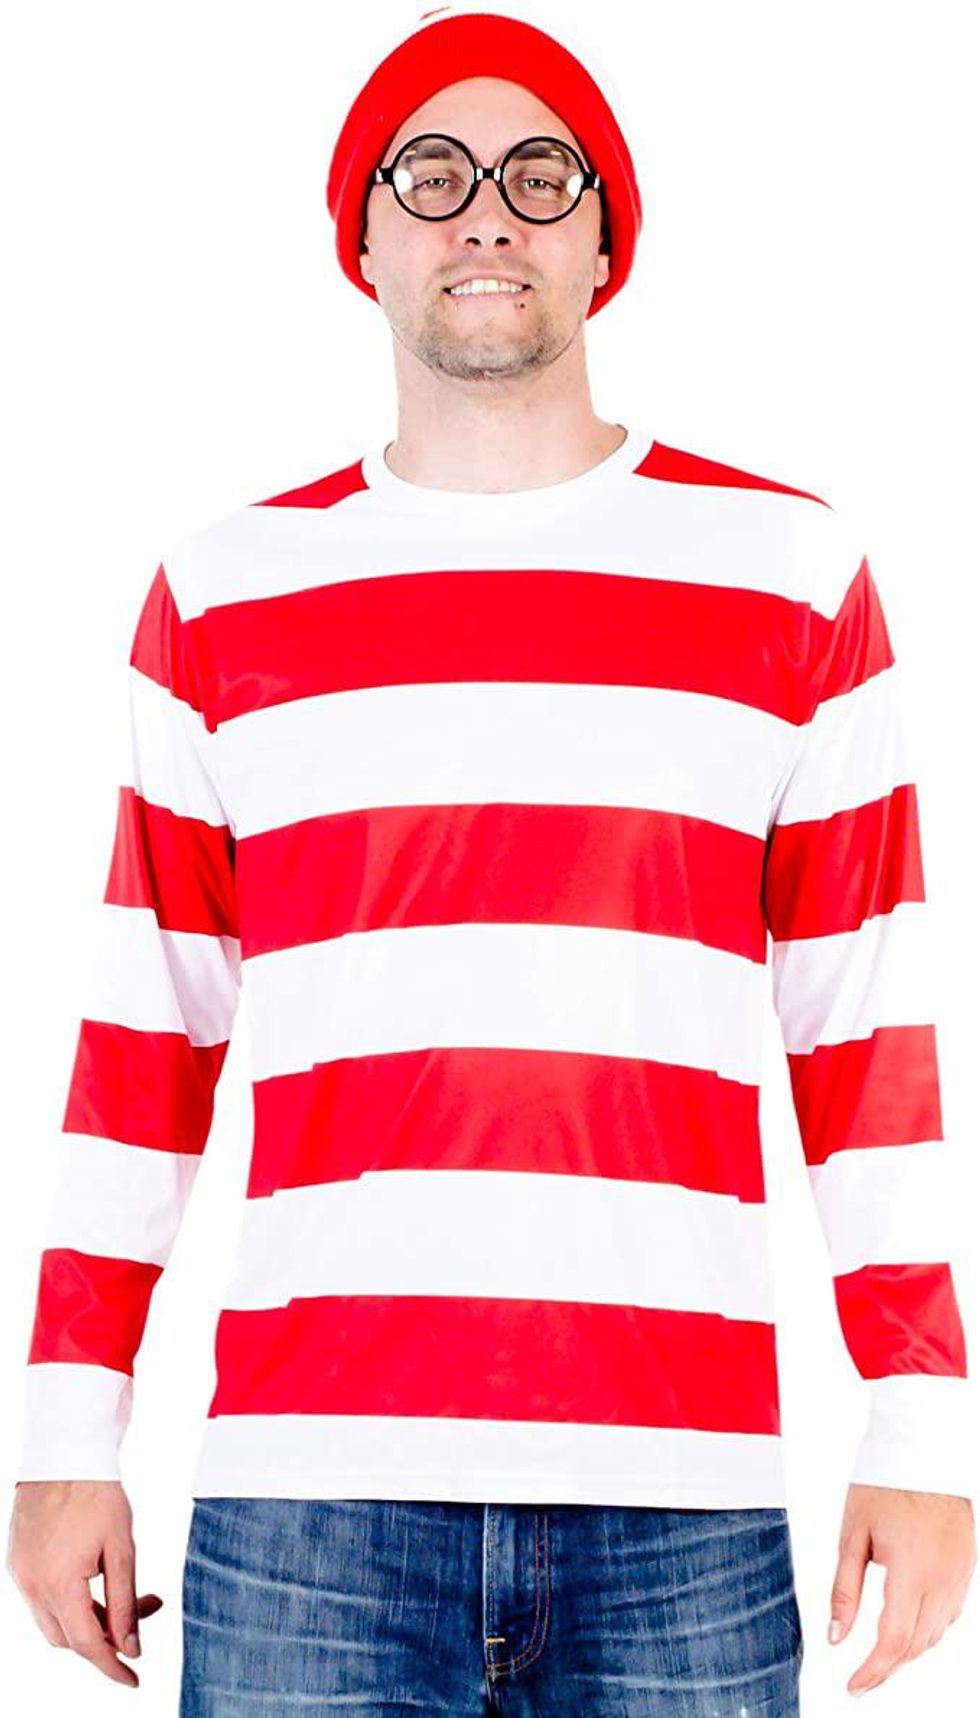 Where's Waldo costume